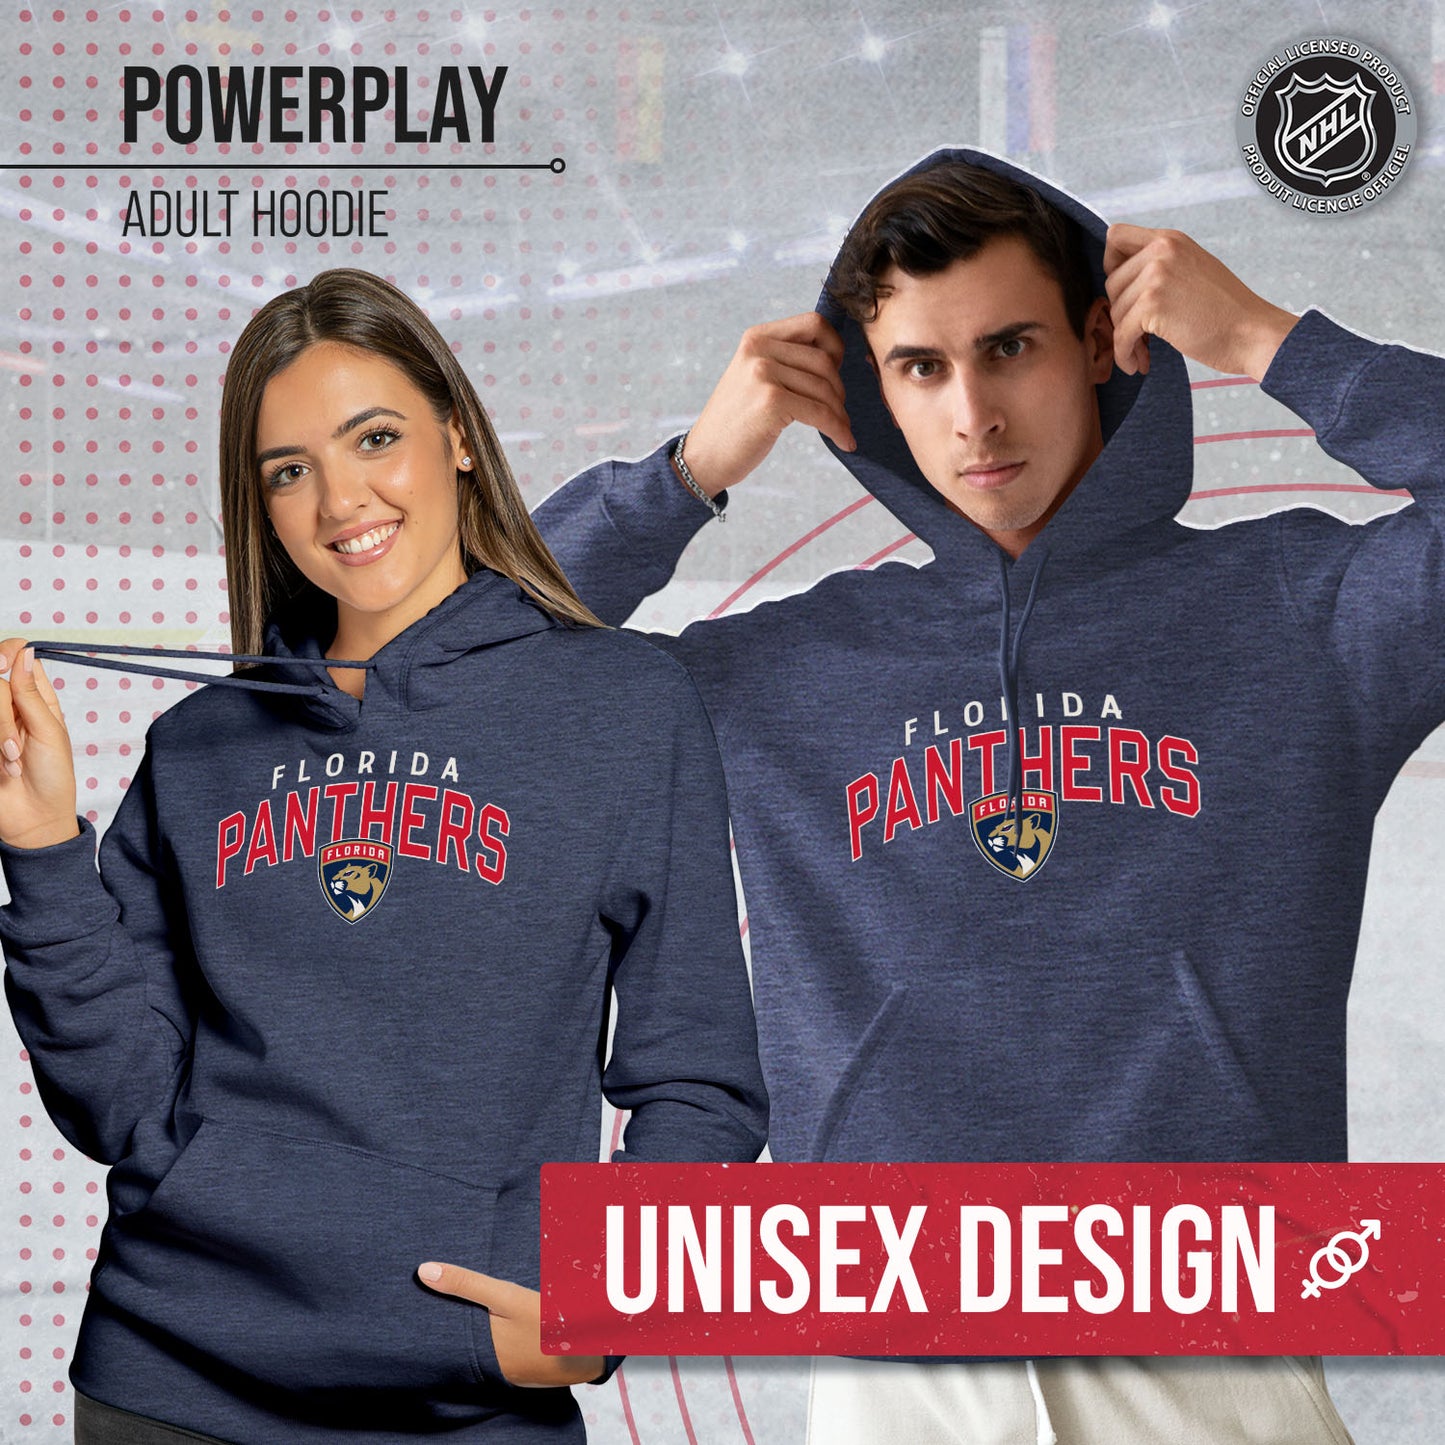 Florida Panthers NHL Adult Unisex Powerplay Hooded Sweatshirt - Navy